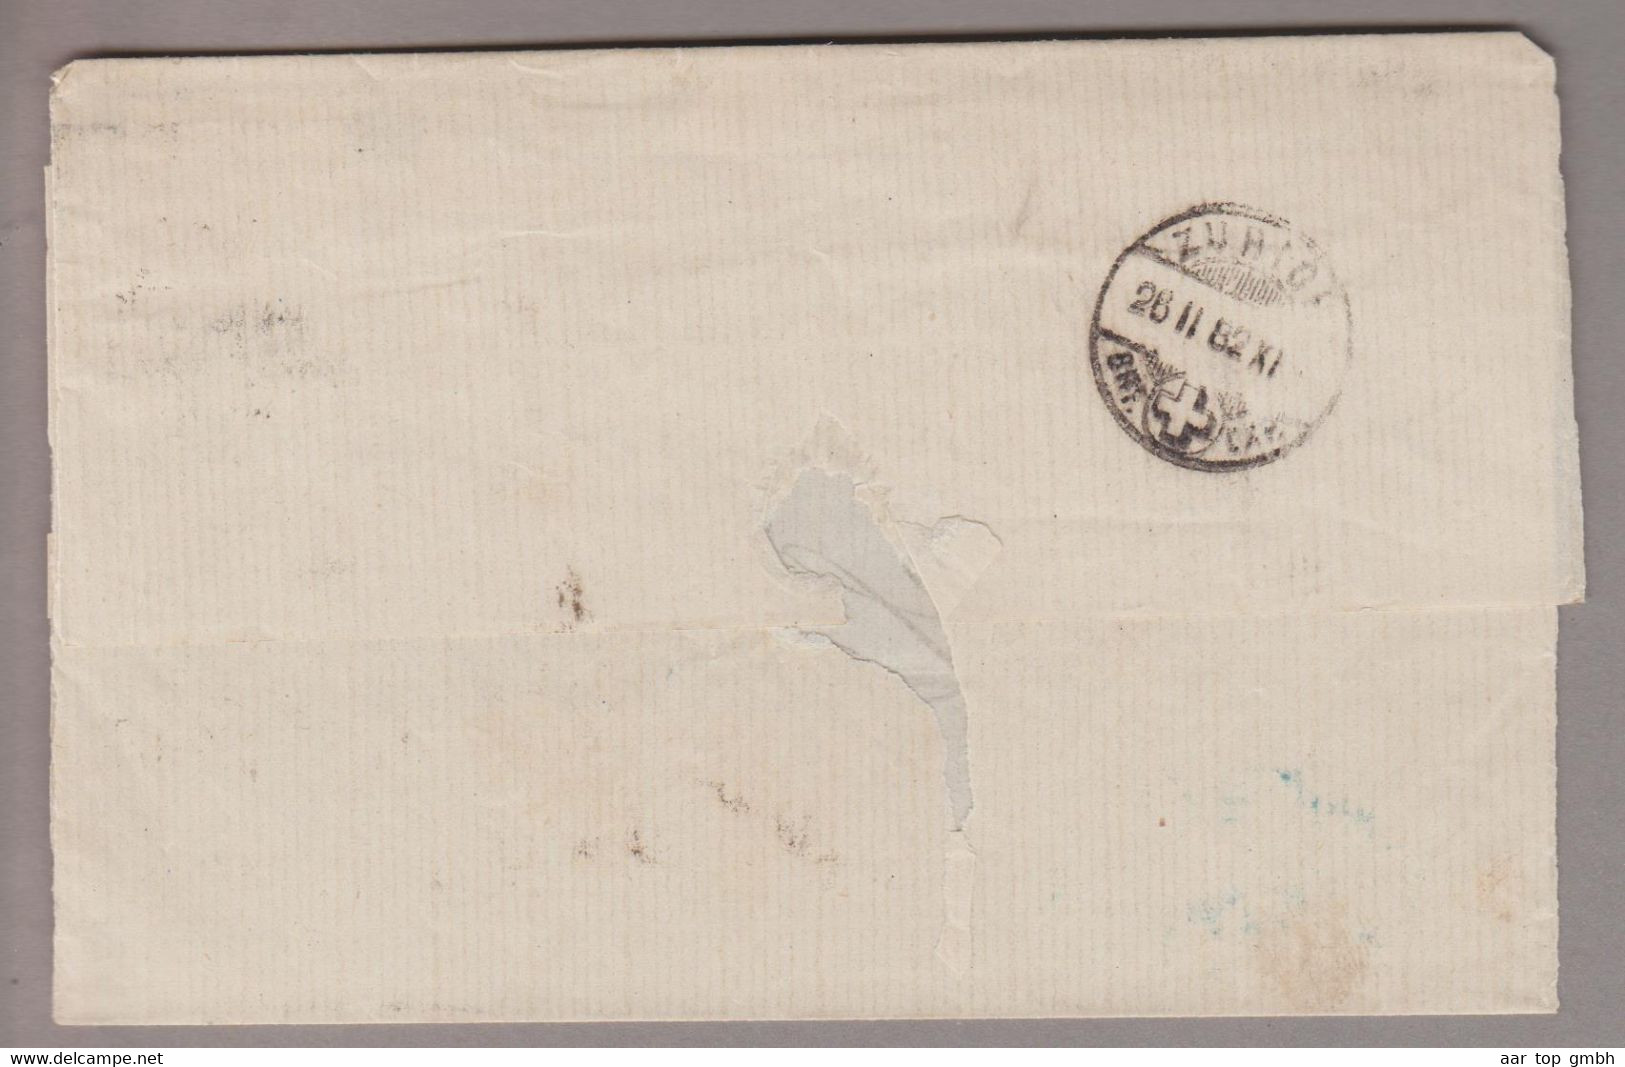 Grossbritannien Heimat Mark-Lane E.C. 1882-02-02 Streifband Nach Zürich Mit 2.5 Penny P 23 - Covers & Documents